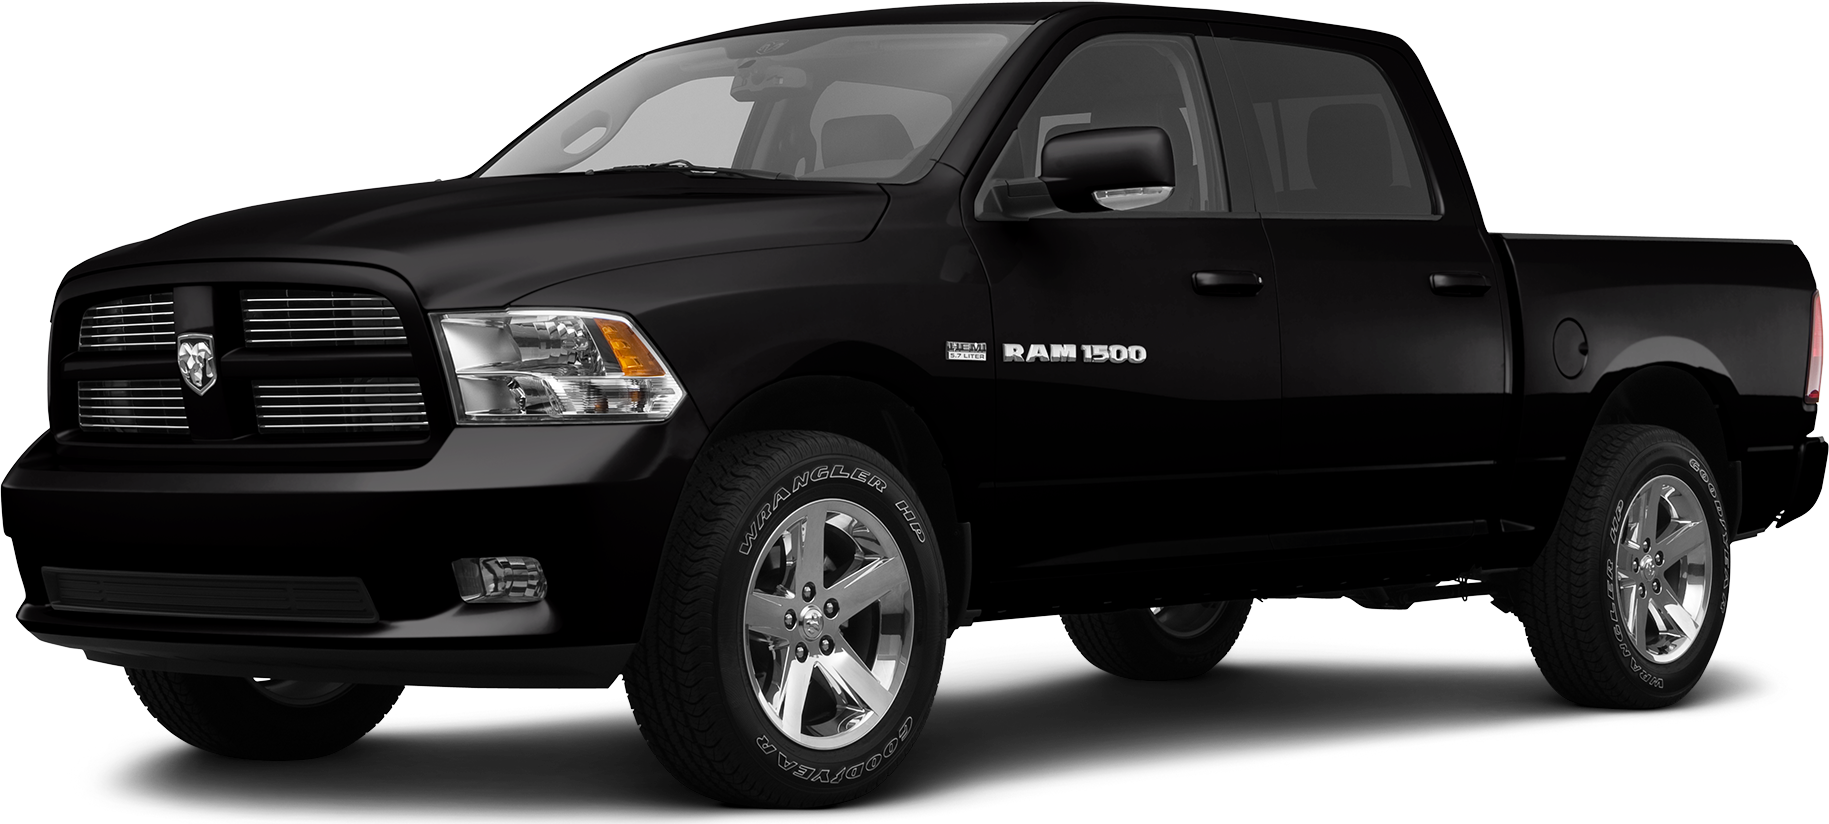 2010 Dodge Ram 1500 4WD Crew Cab 140.5 Laramie Price & Specifications -  The Car Guide